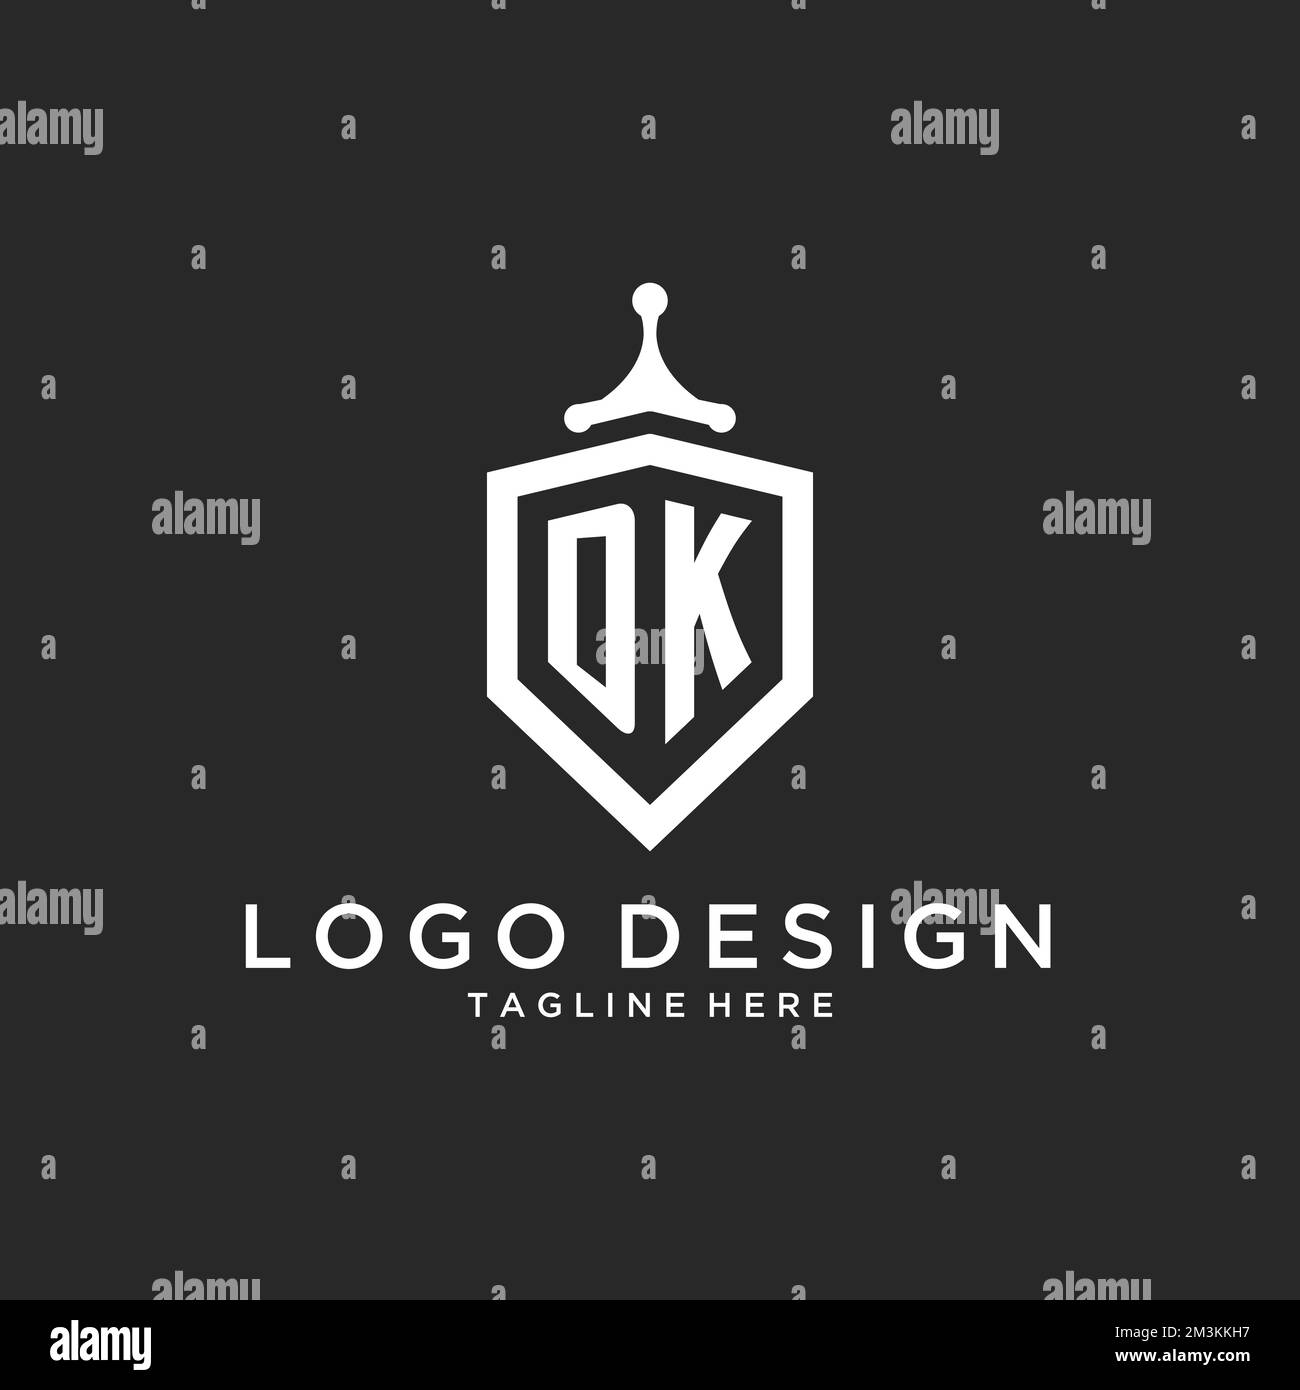 DK monogram logo initial with shield guard shape design ideas Stock ...